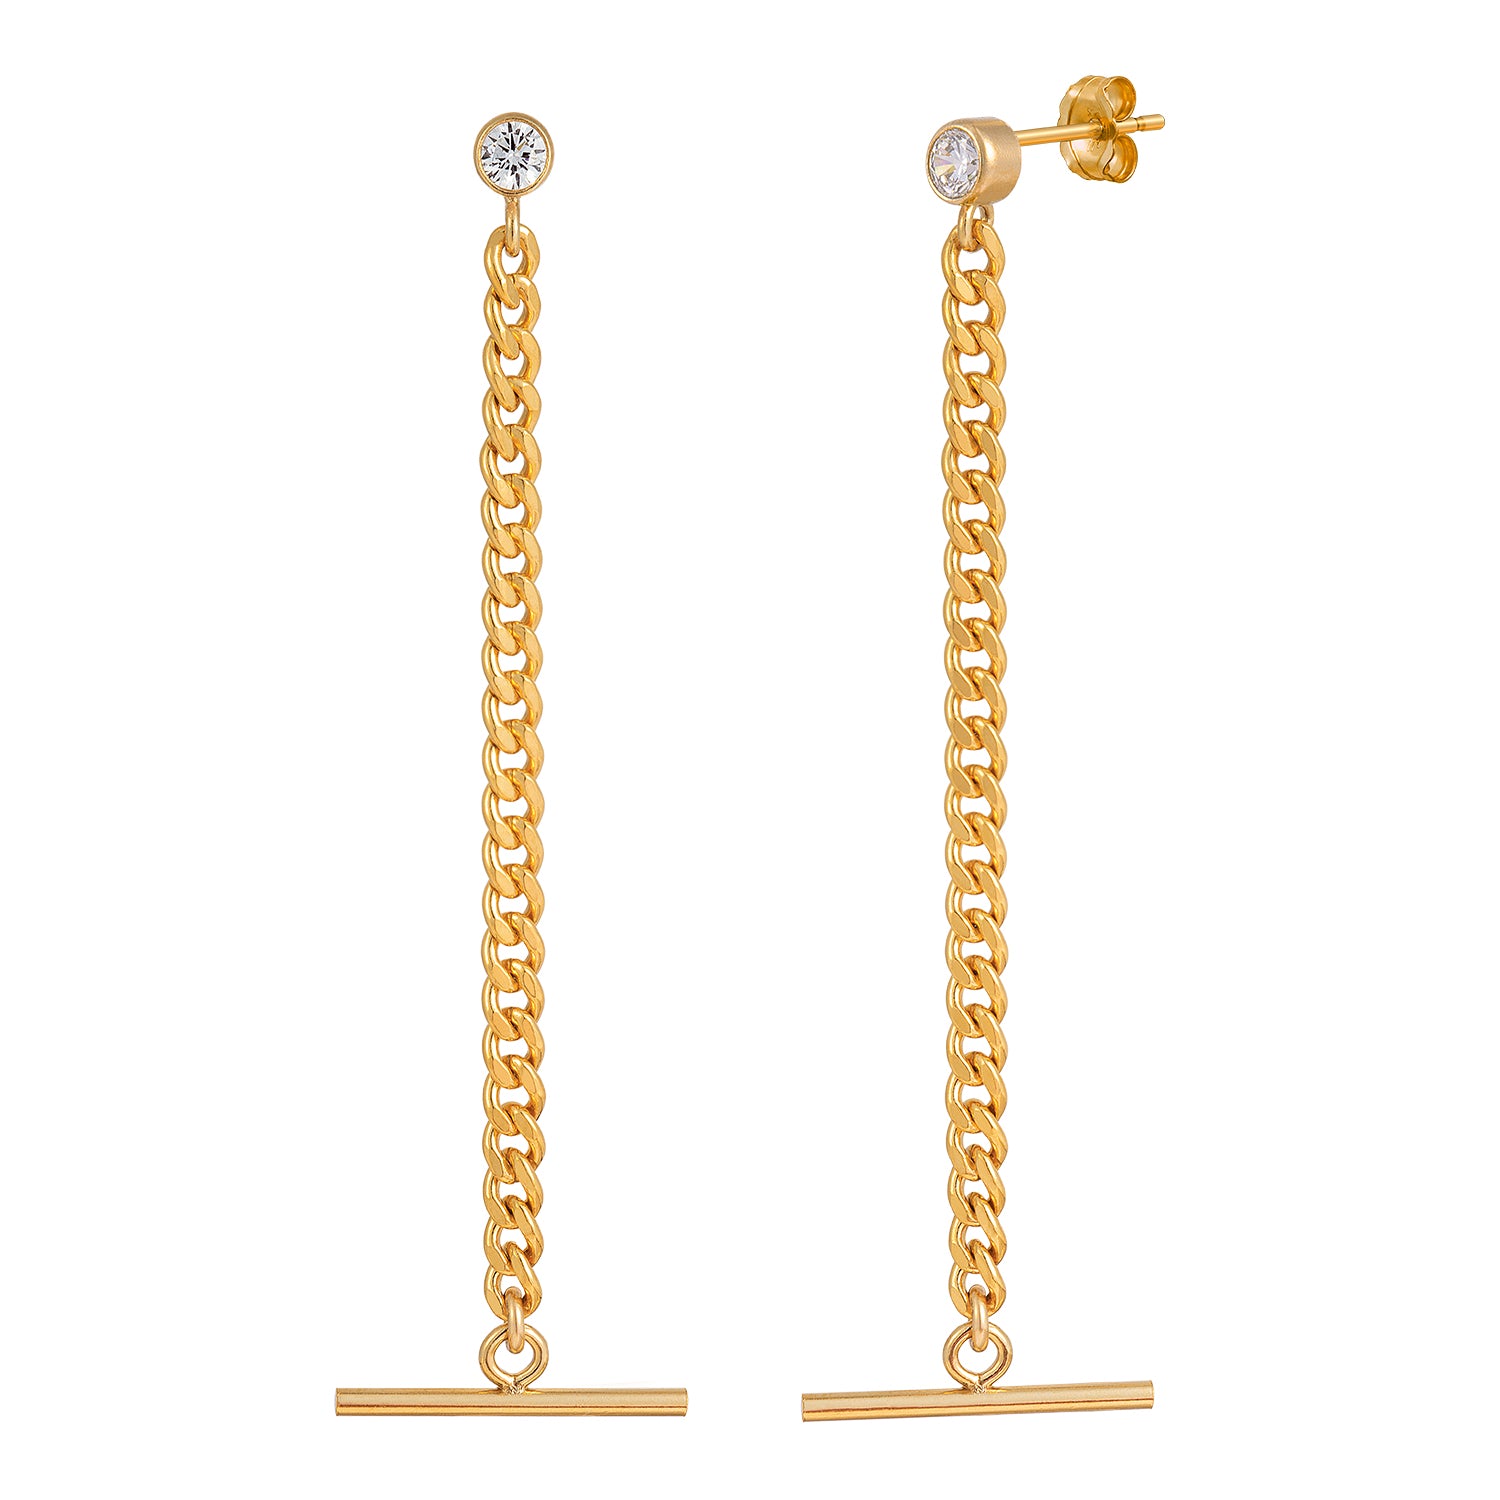 J&CO Jewellery Curb Chain Bracelet